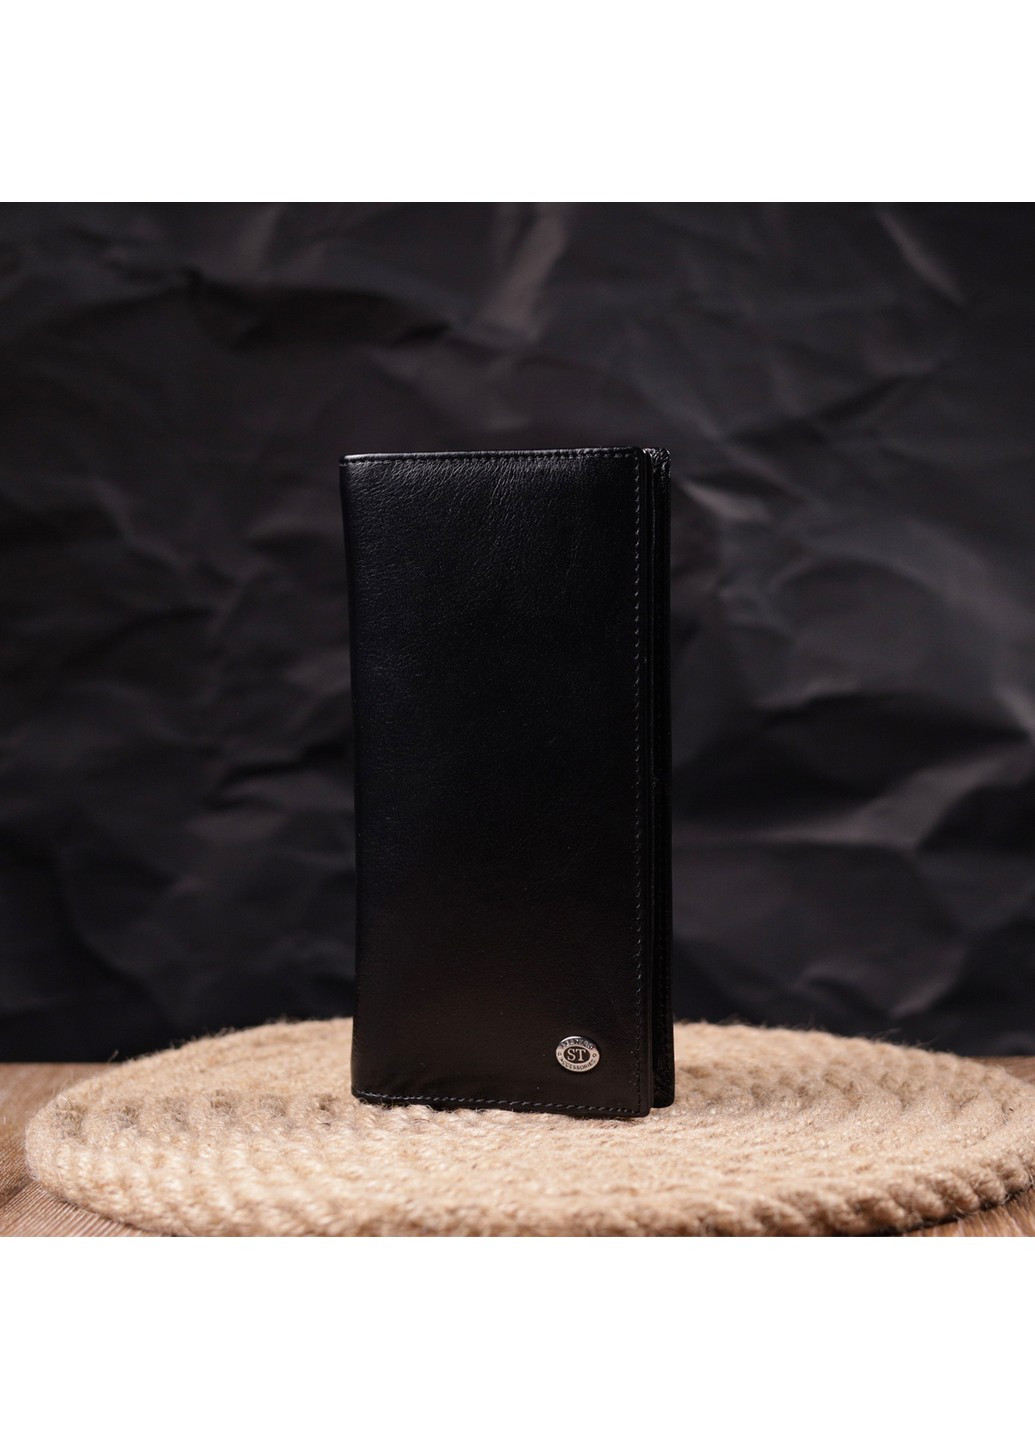 Бумажник мужской кожаный 9х18,5х2 см st leather (258885102)